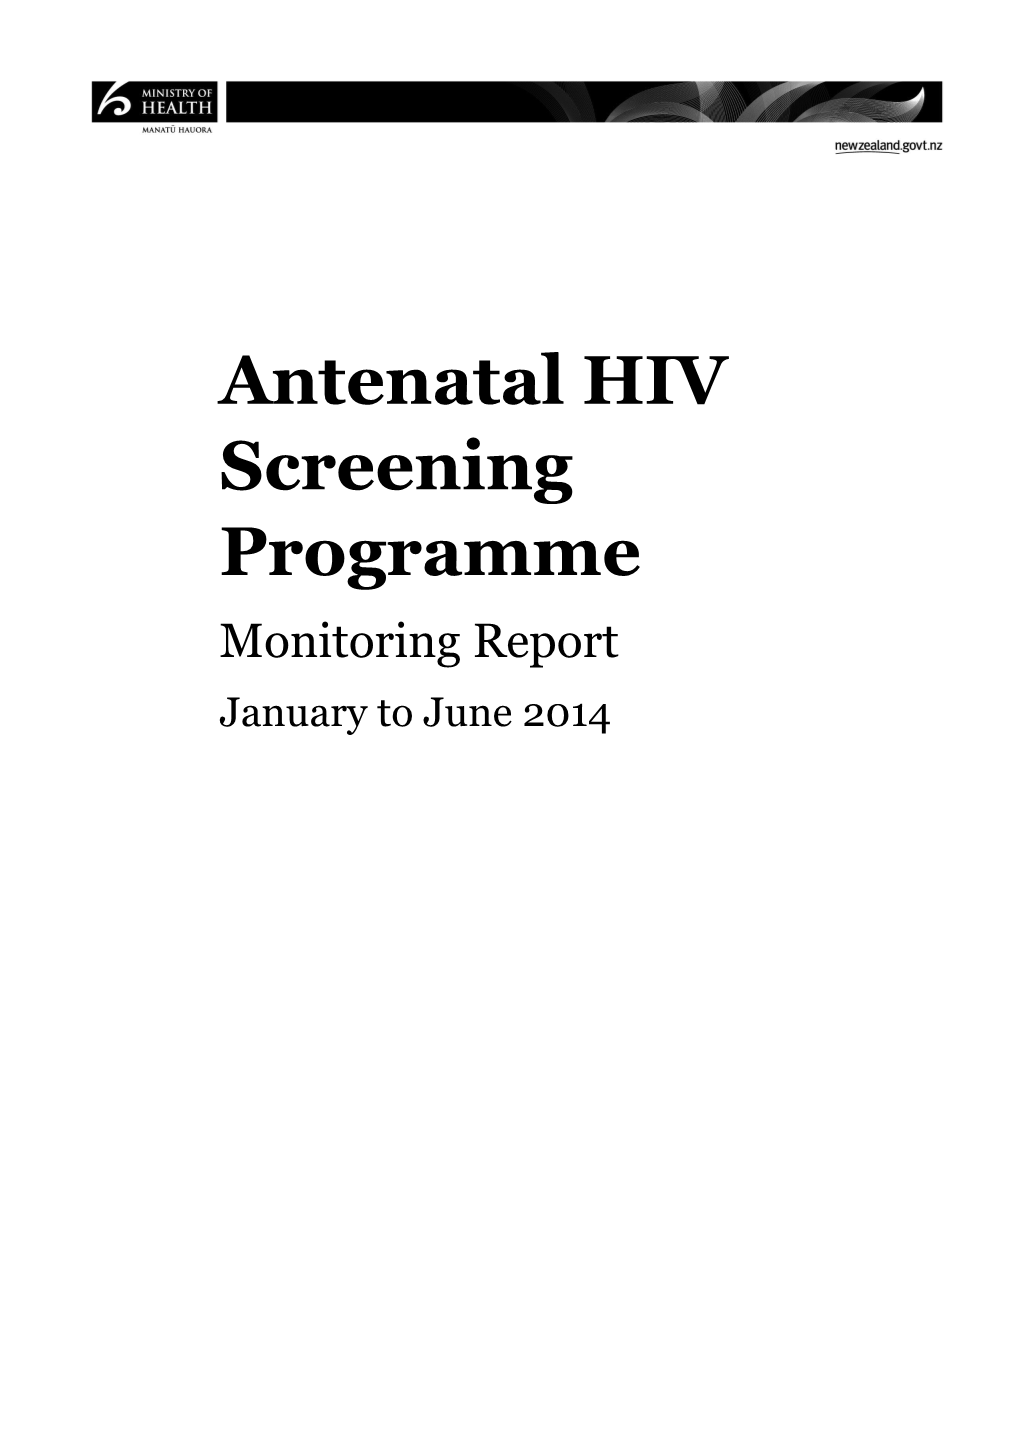 Universal Offer Antenatal HIV Screening Programme: Monitoring Report January to June 2012